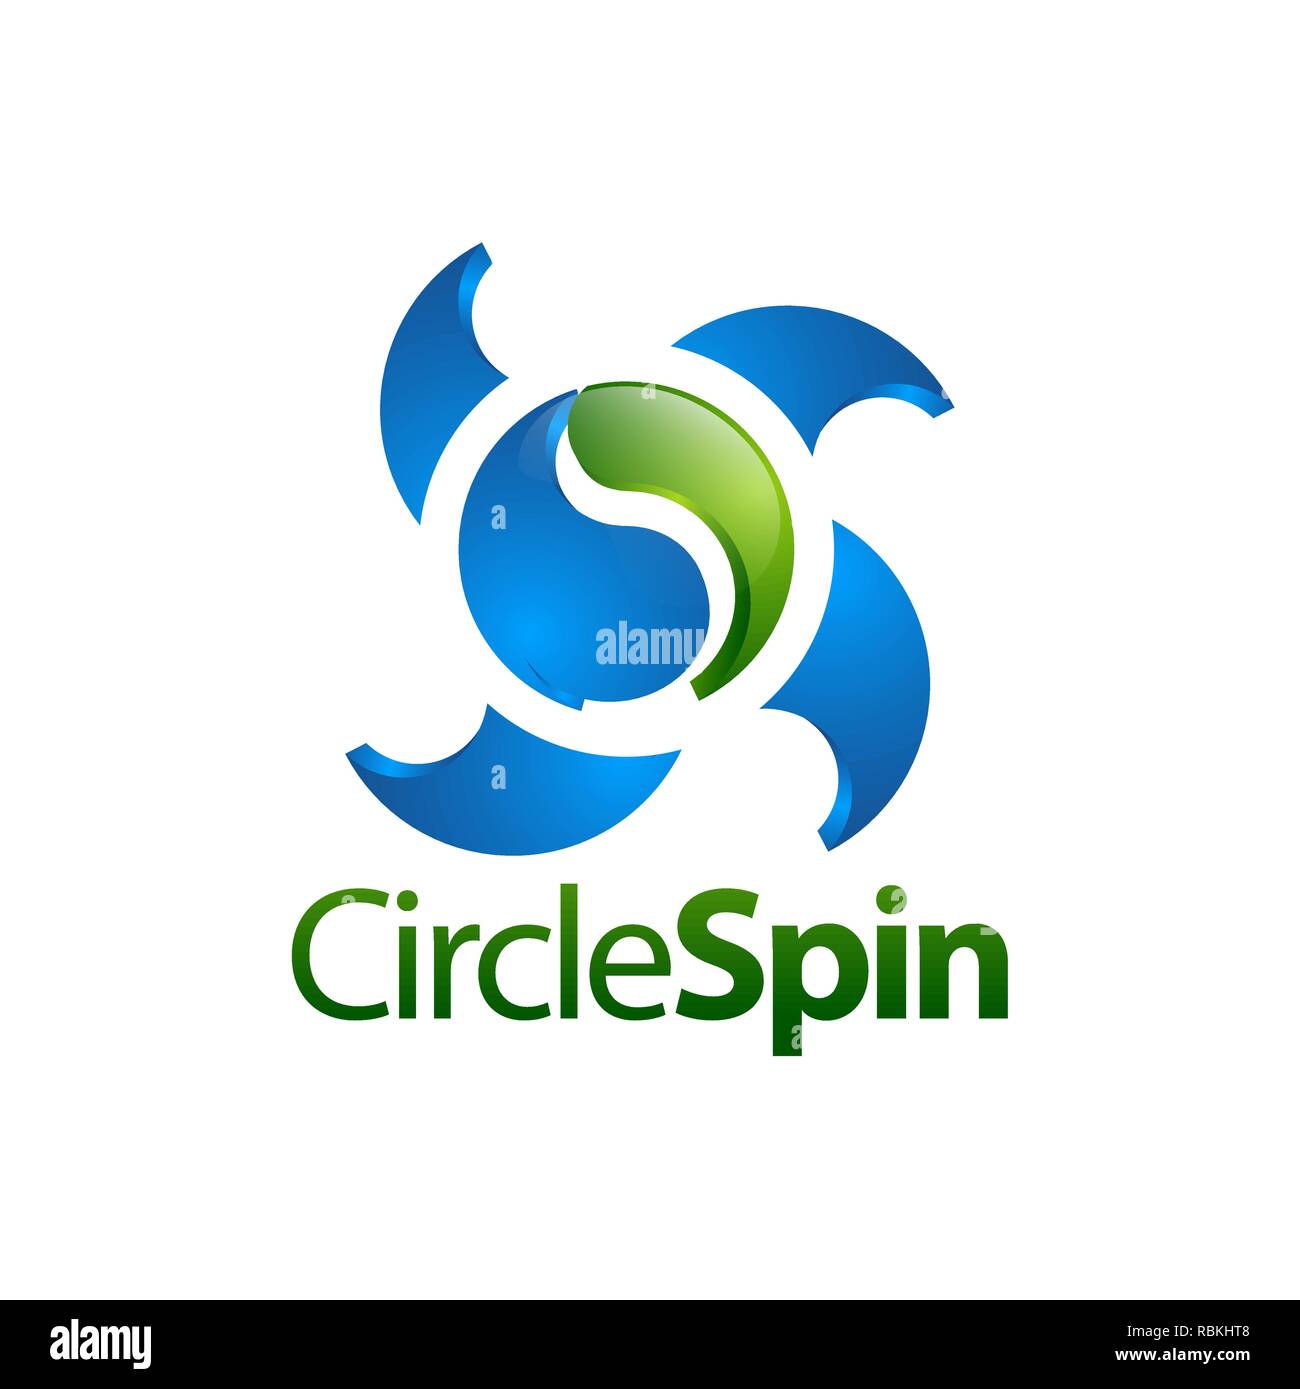 Circle spin. Three dimensional yin yang spin logo concept design template idea Stock Vector